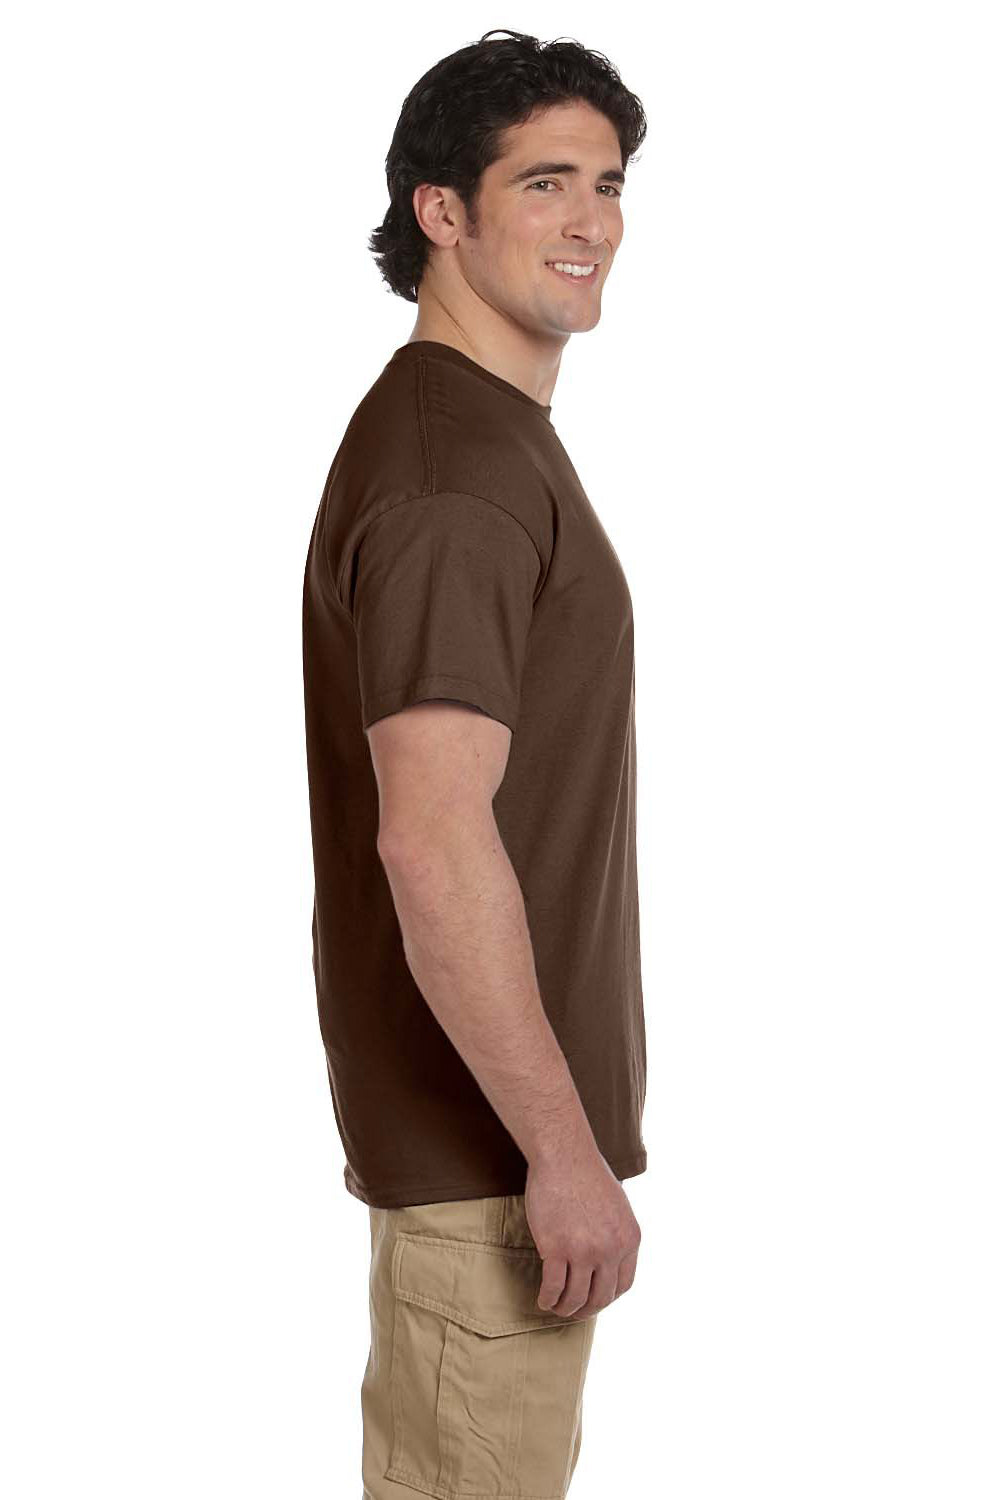 Fruit Of The Mens Loom Chocolate Short Sleeve Jersey HD Crewneck Brown T-Shirt 3930/3931/3930R —